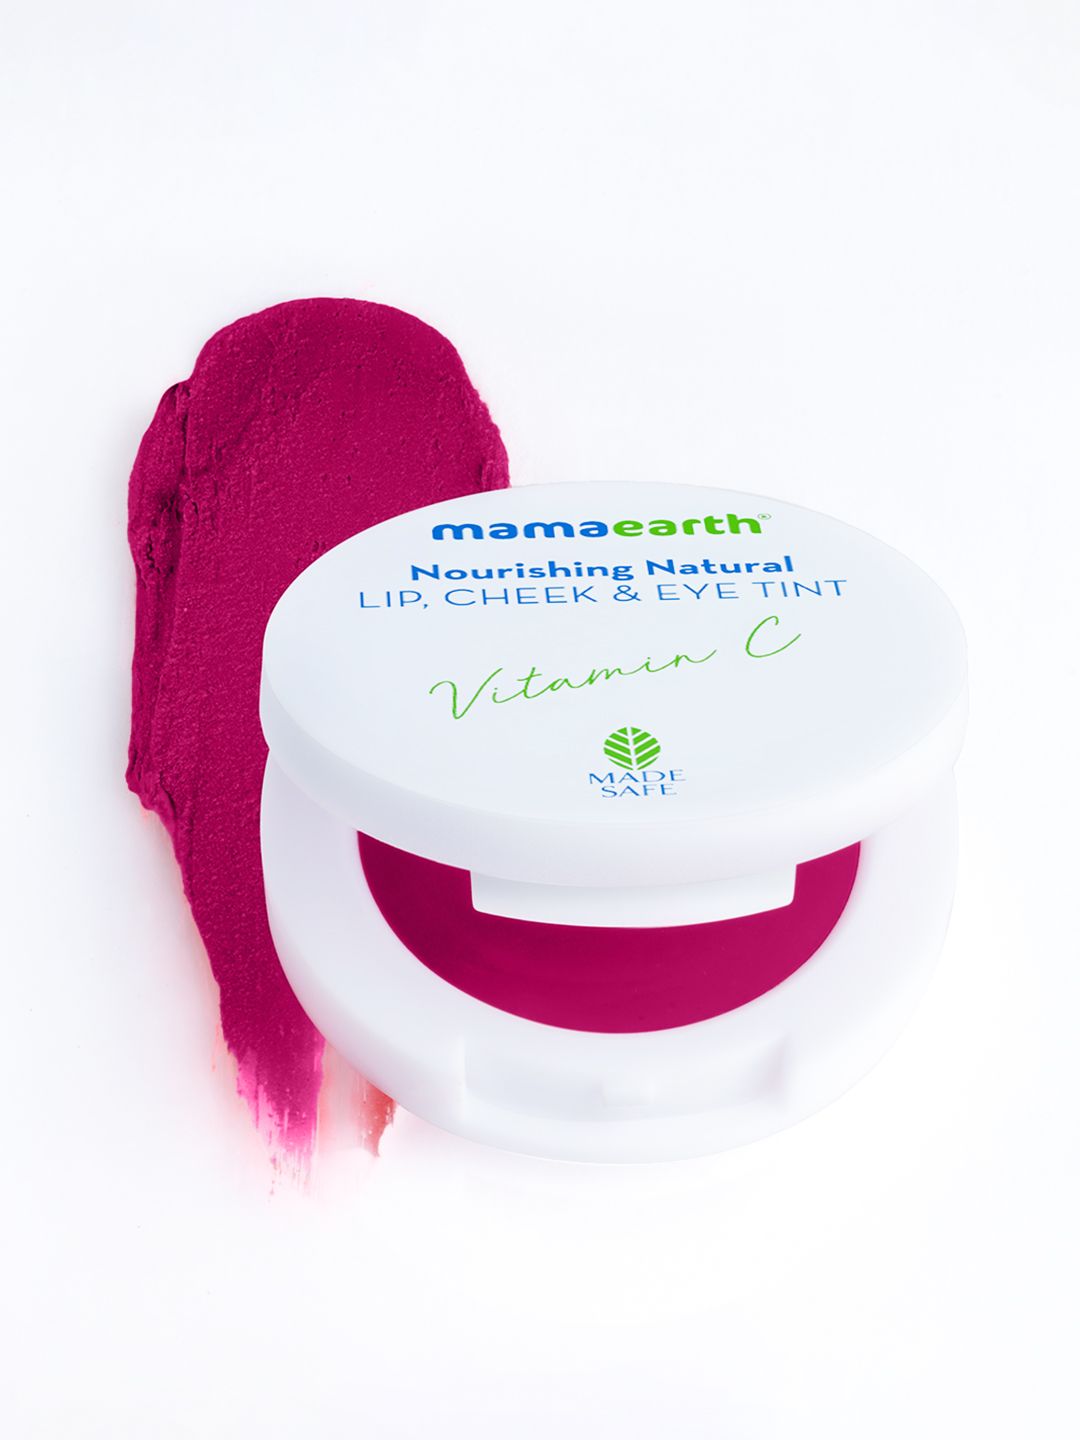 Mamaearth Nourishing Natural Lip Cheek & Eye Tint with with Vitamin C 4g - Rose Pink 03